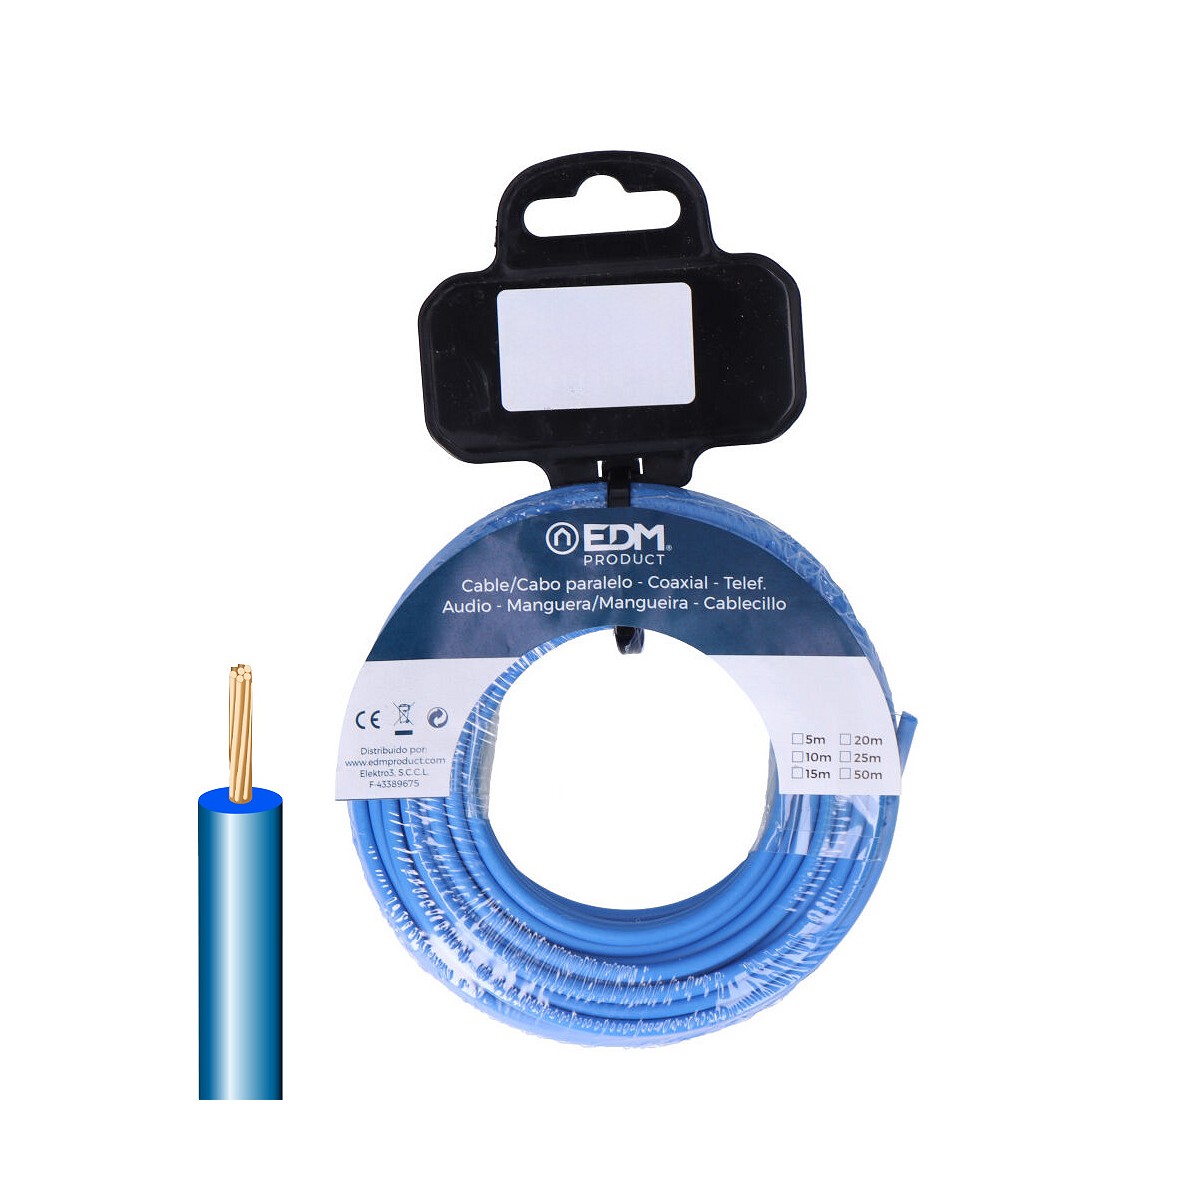 Carrete cablecillo flexible 4mm azul libre de halógenos 20m